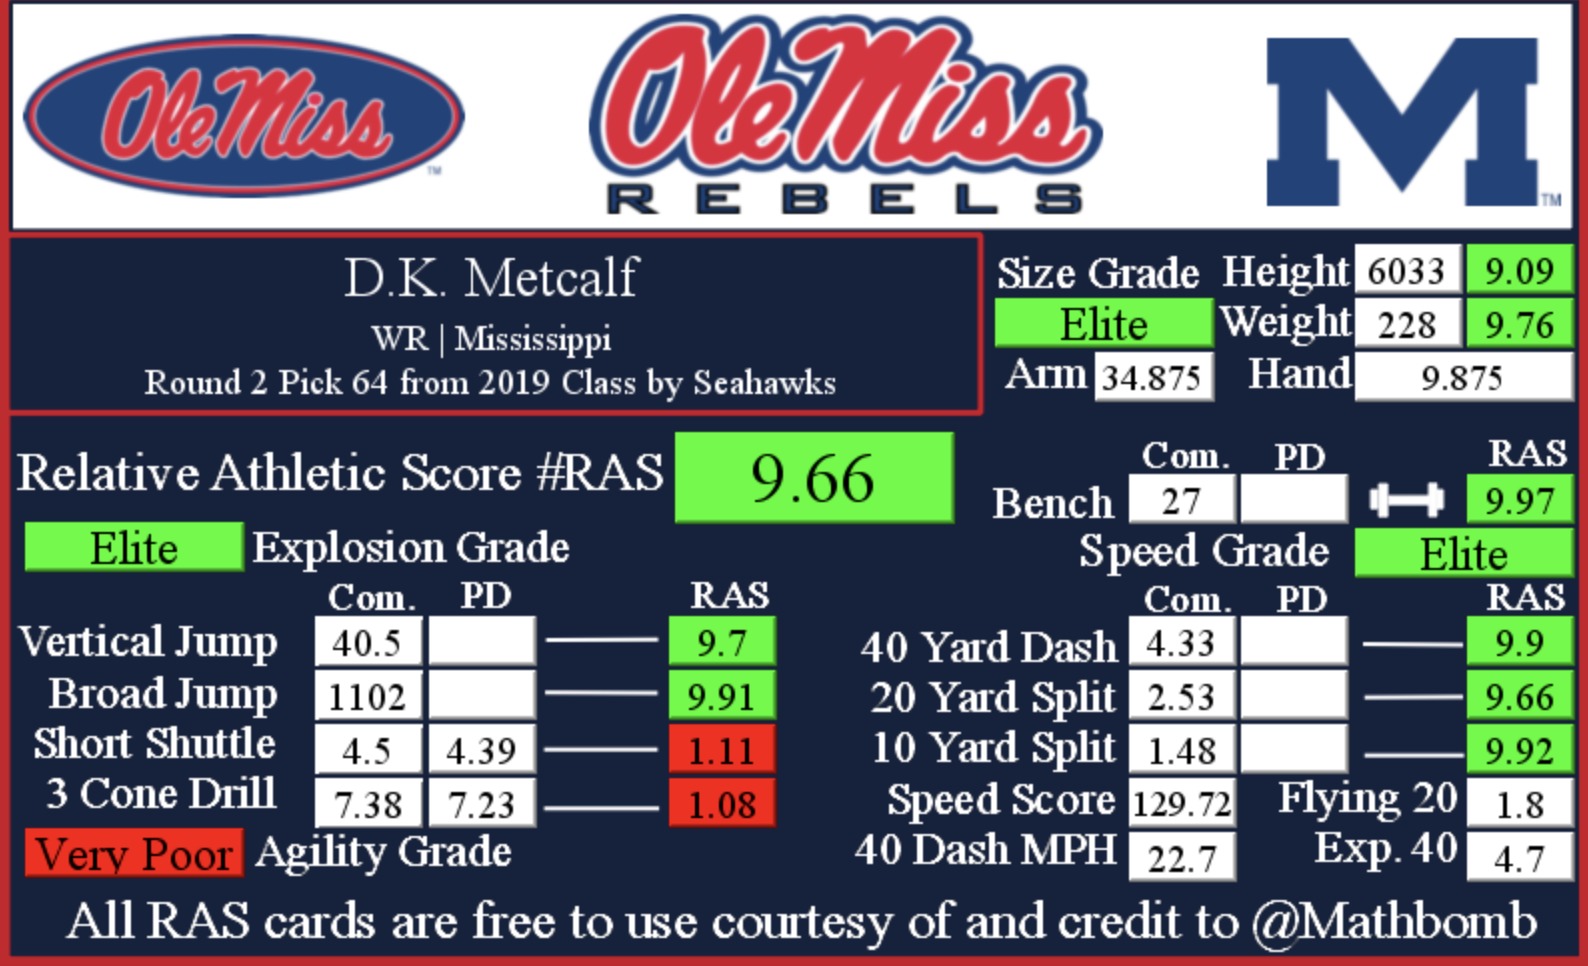 D.K. Metcalf's (former receiver of Denver Broncos quarterback Russell Wilson) Relative Athletic Score